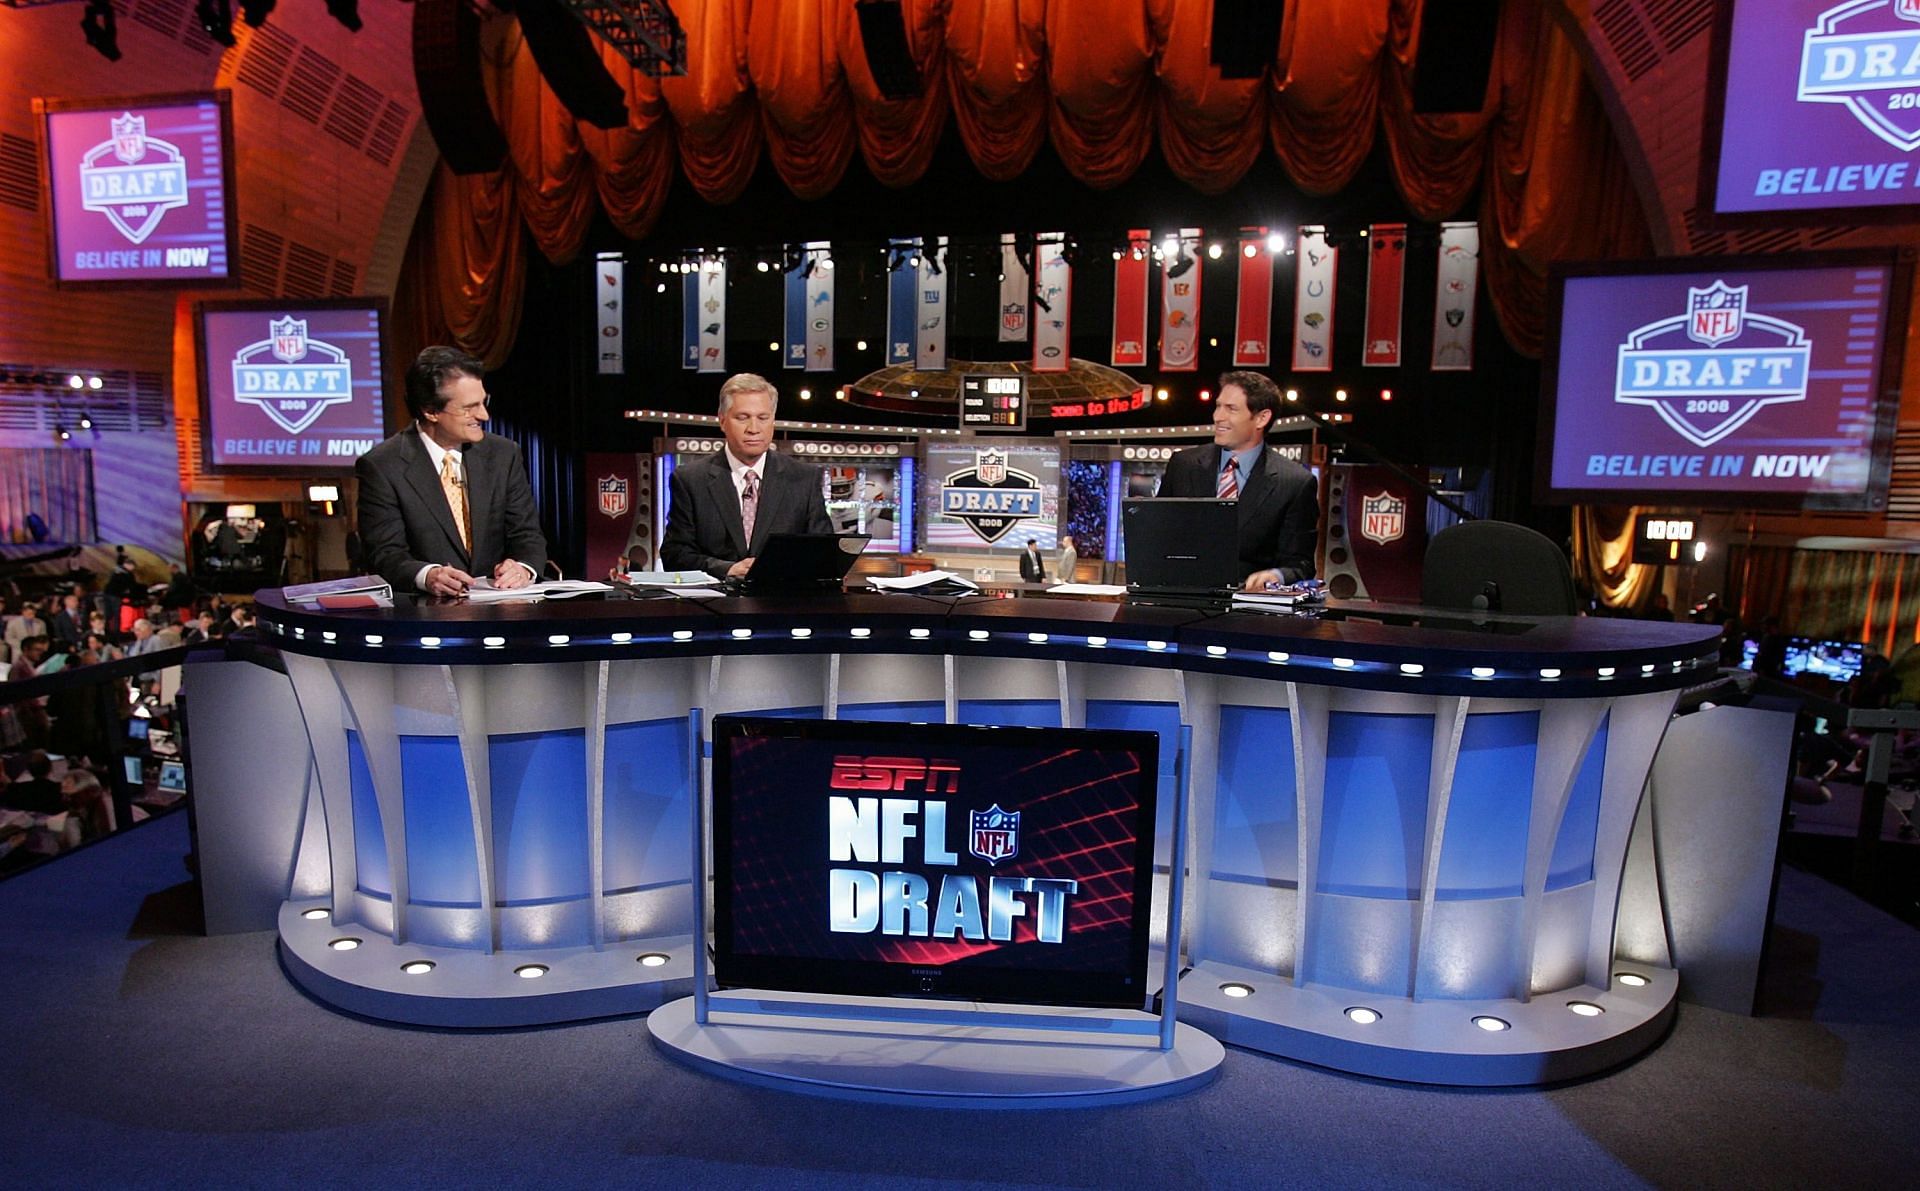 Our Favorite NFL Draft Expert Mel Kiper Jr – The Narrows Restaurant